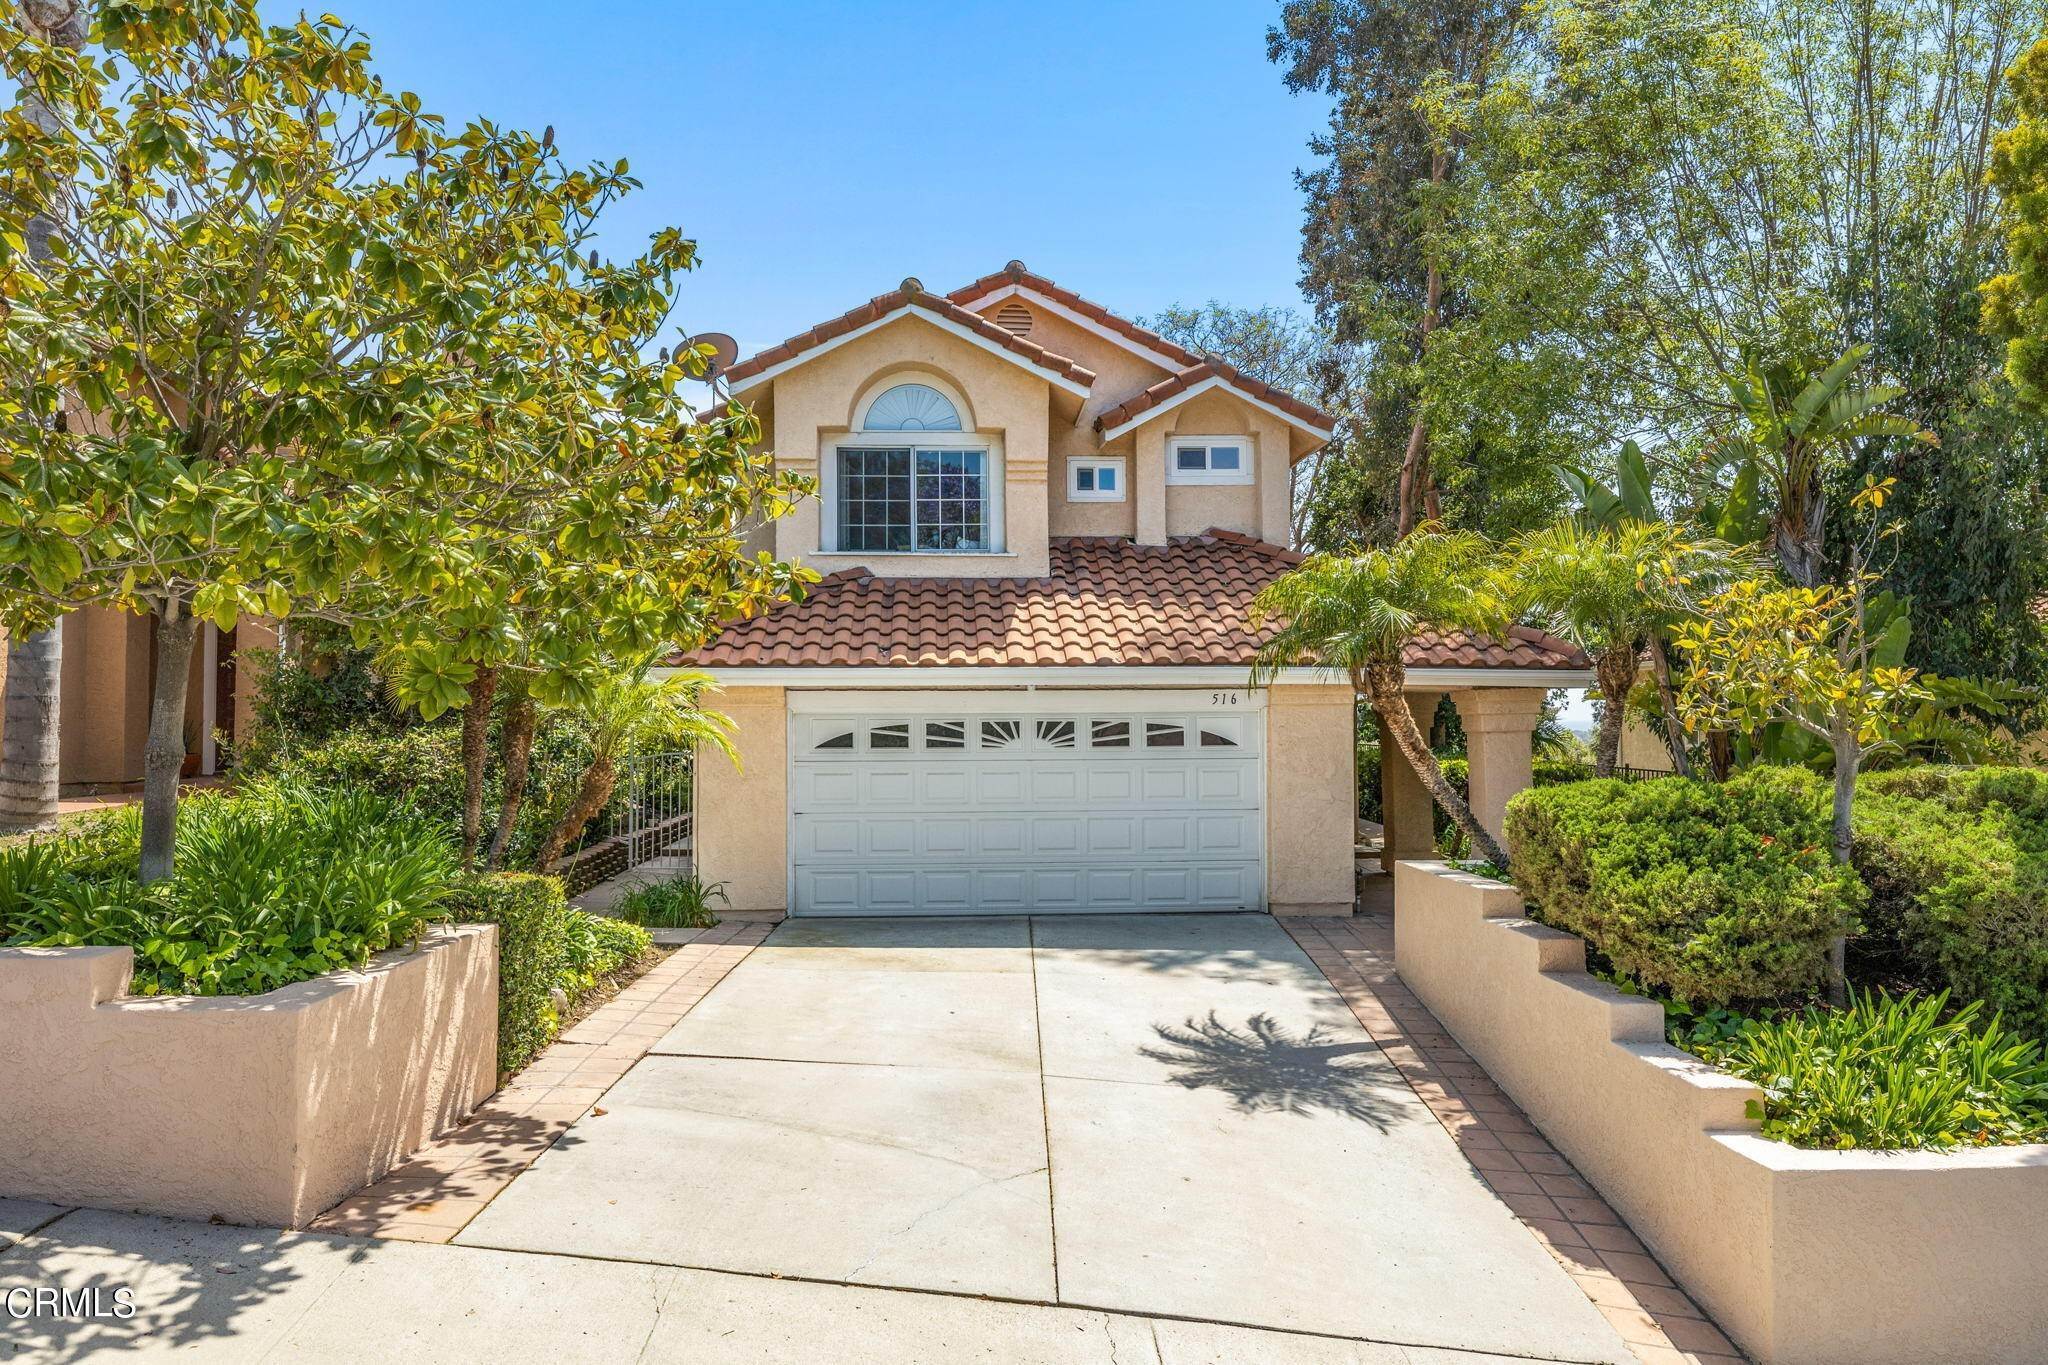 1. Single Family Homes for Sale at 516 Arapaho Street Ventura, California 93001 United States